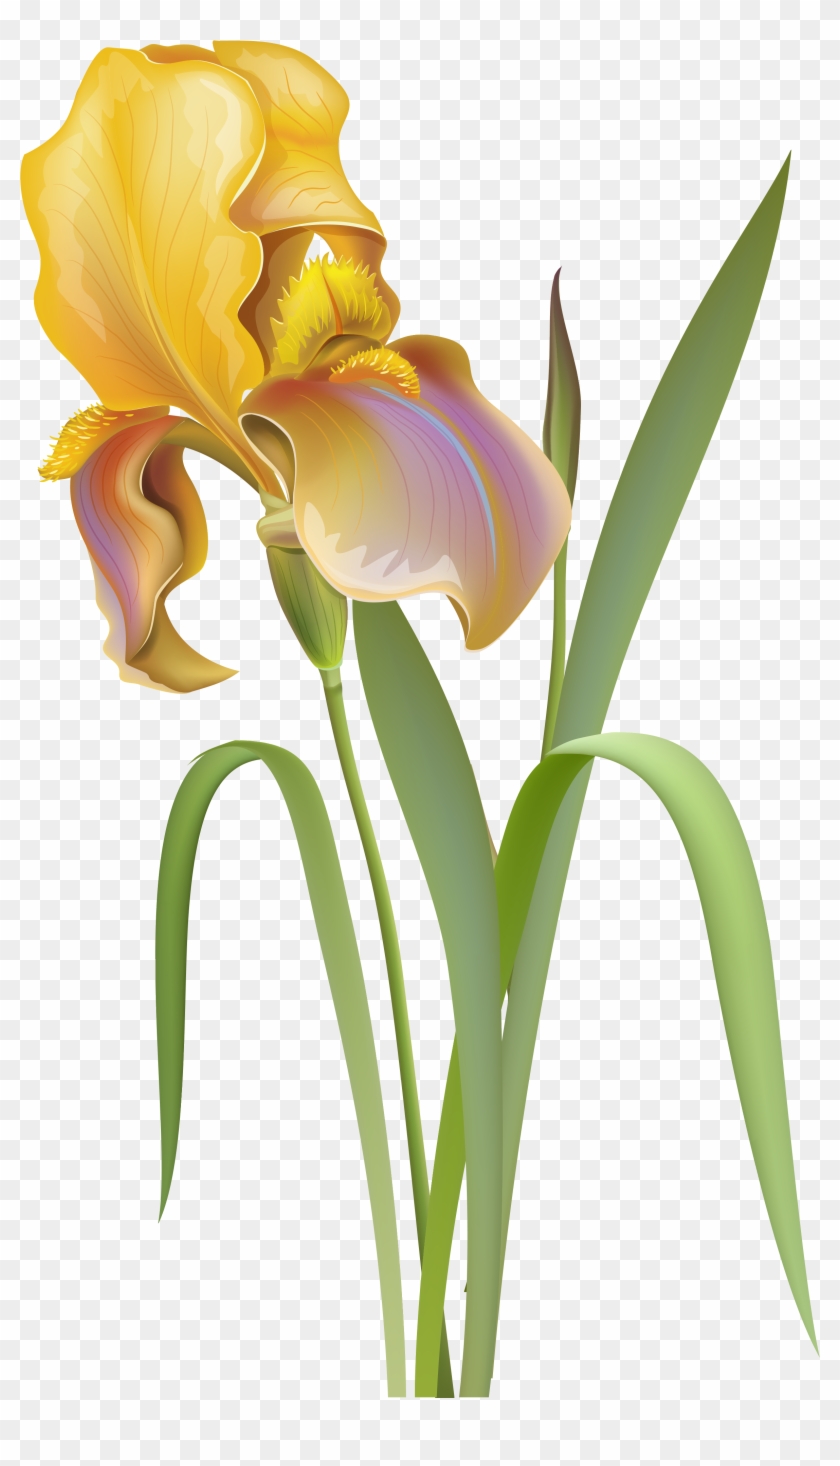 Flower Irises Desktop Wallpaper Clip Art - Flower Irises Desktop Wallpaper Clip Art #331636